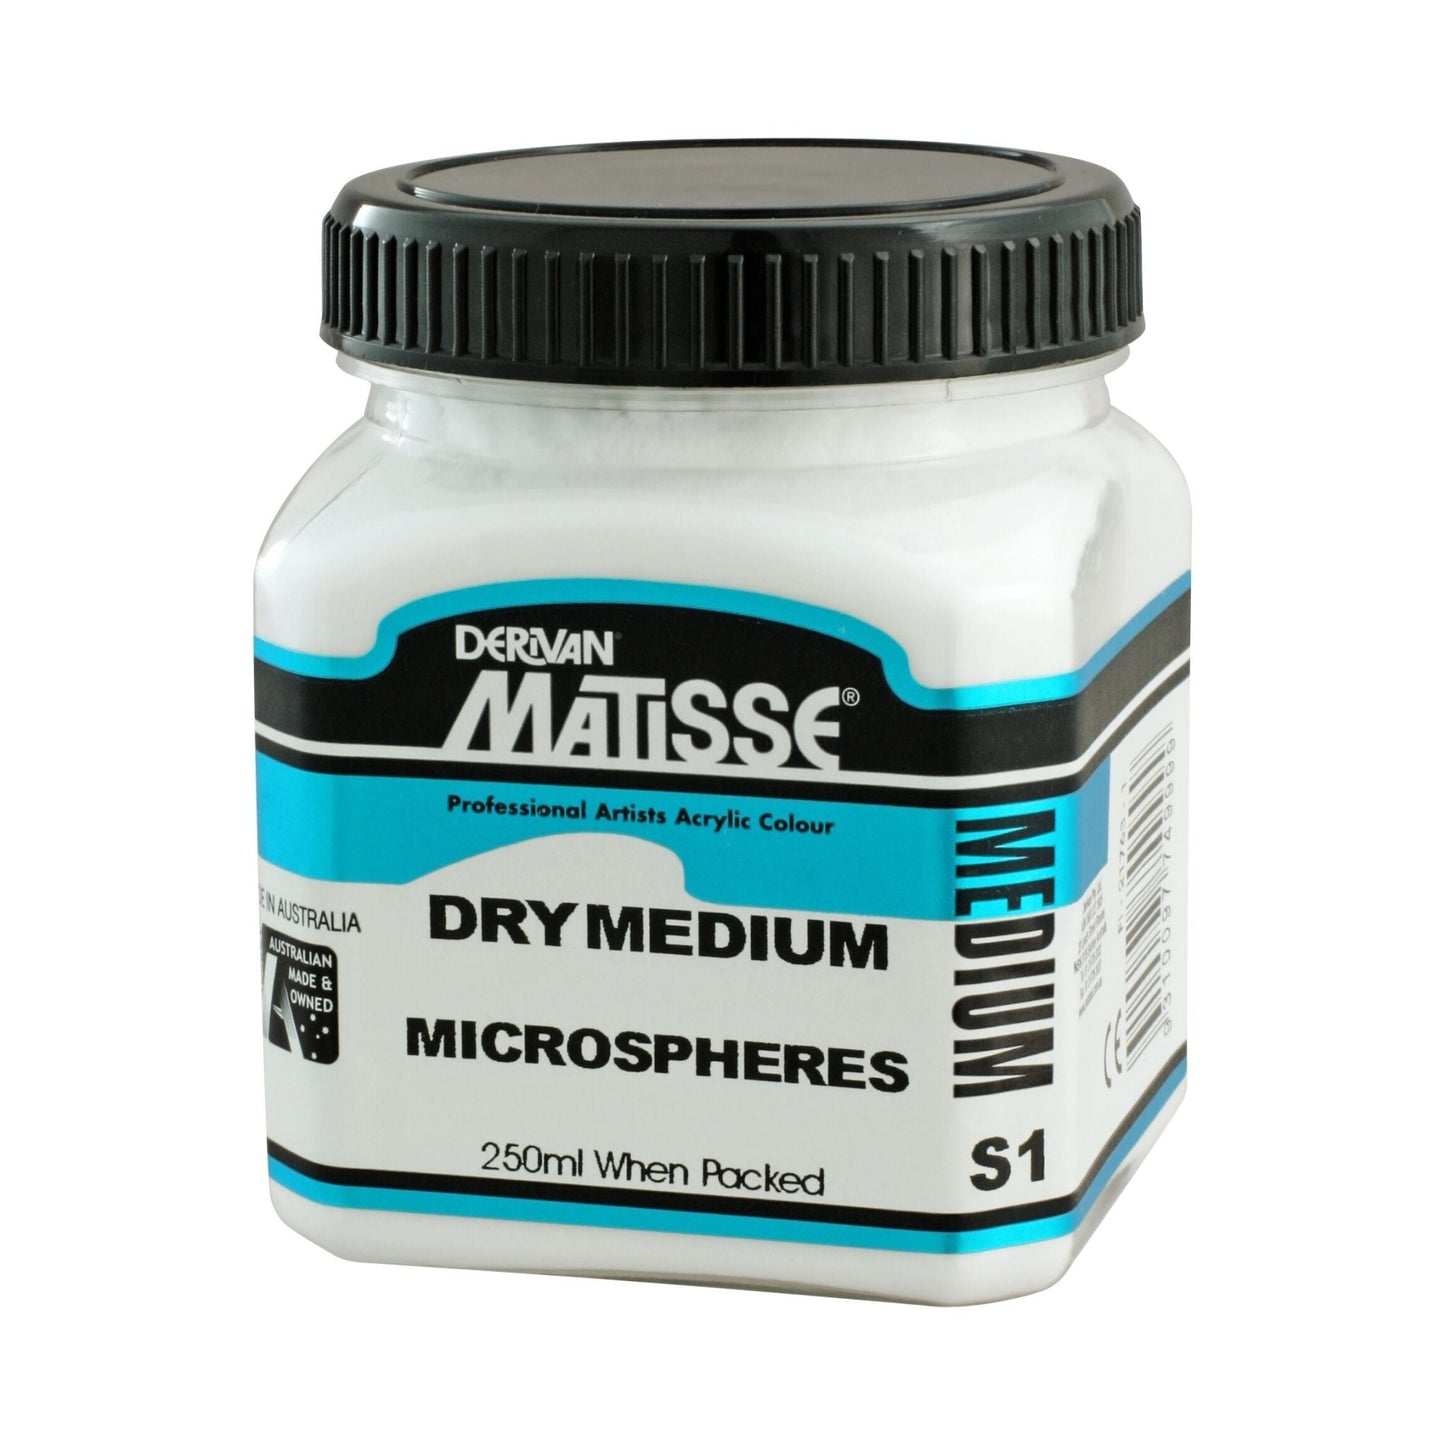 Matisse Dry Medium 250ml Microspheres - theartshop.com.au